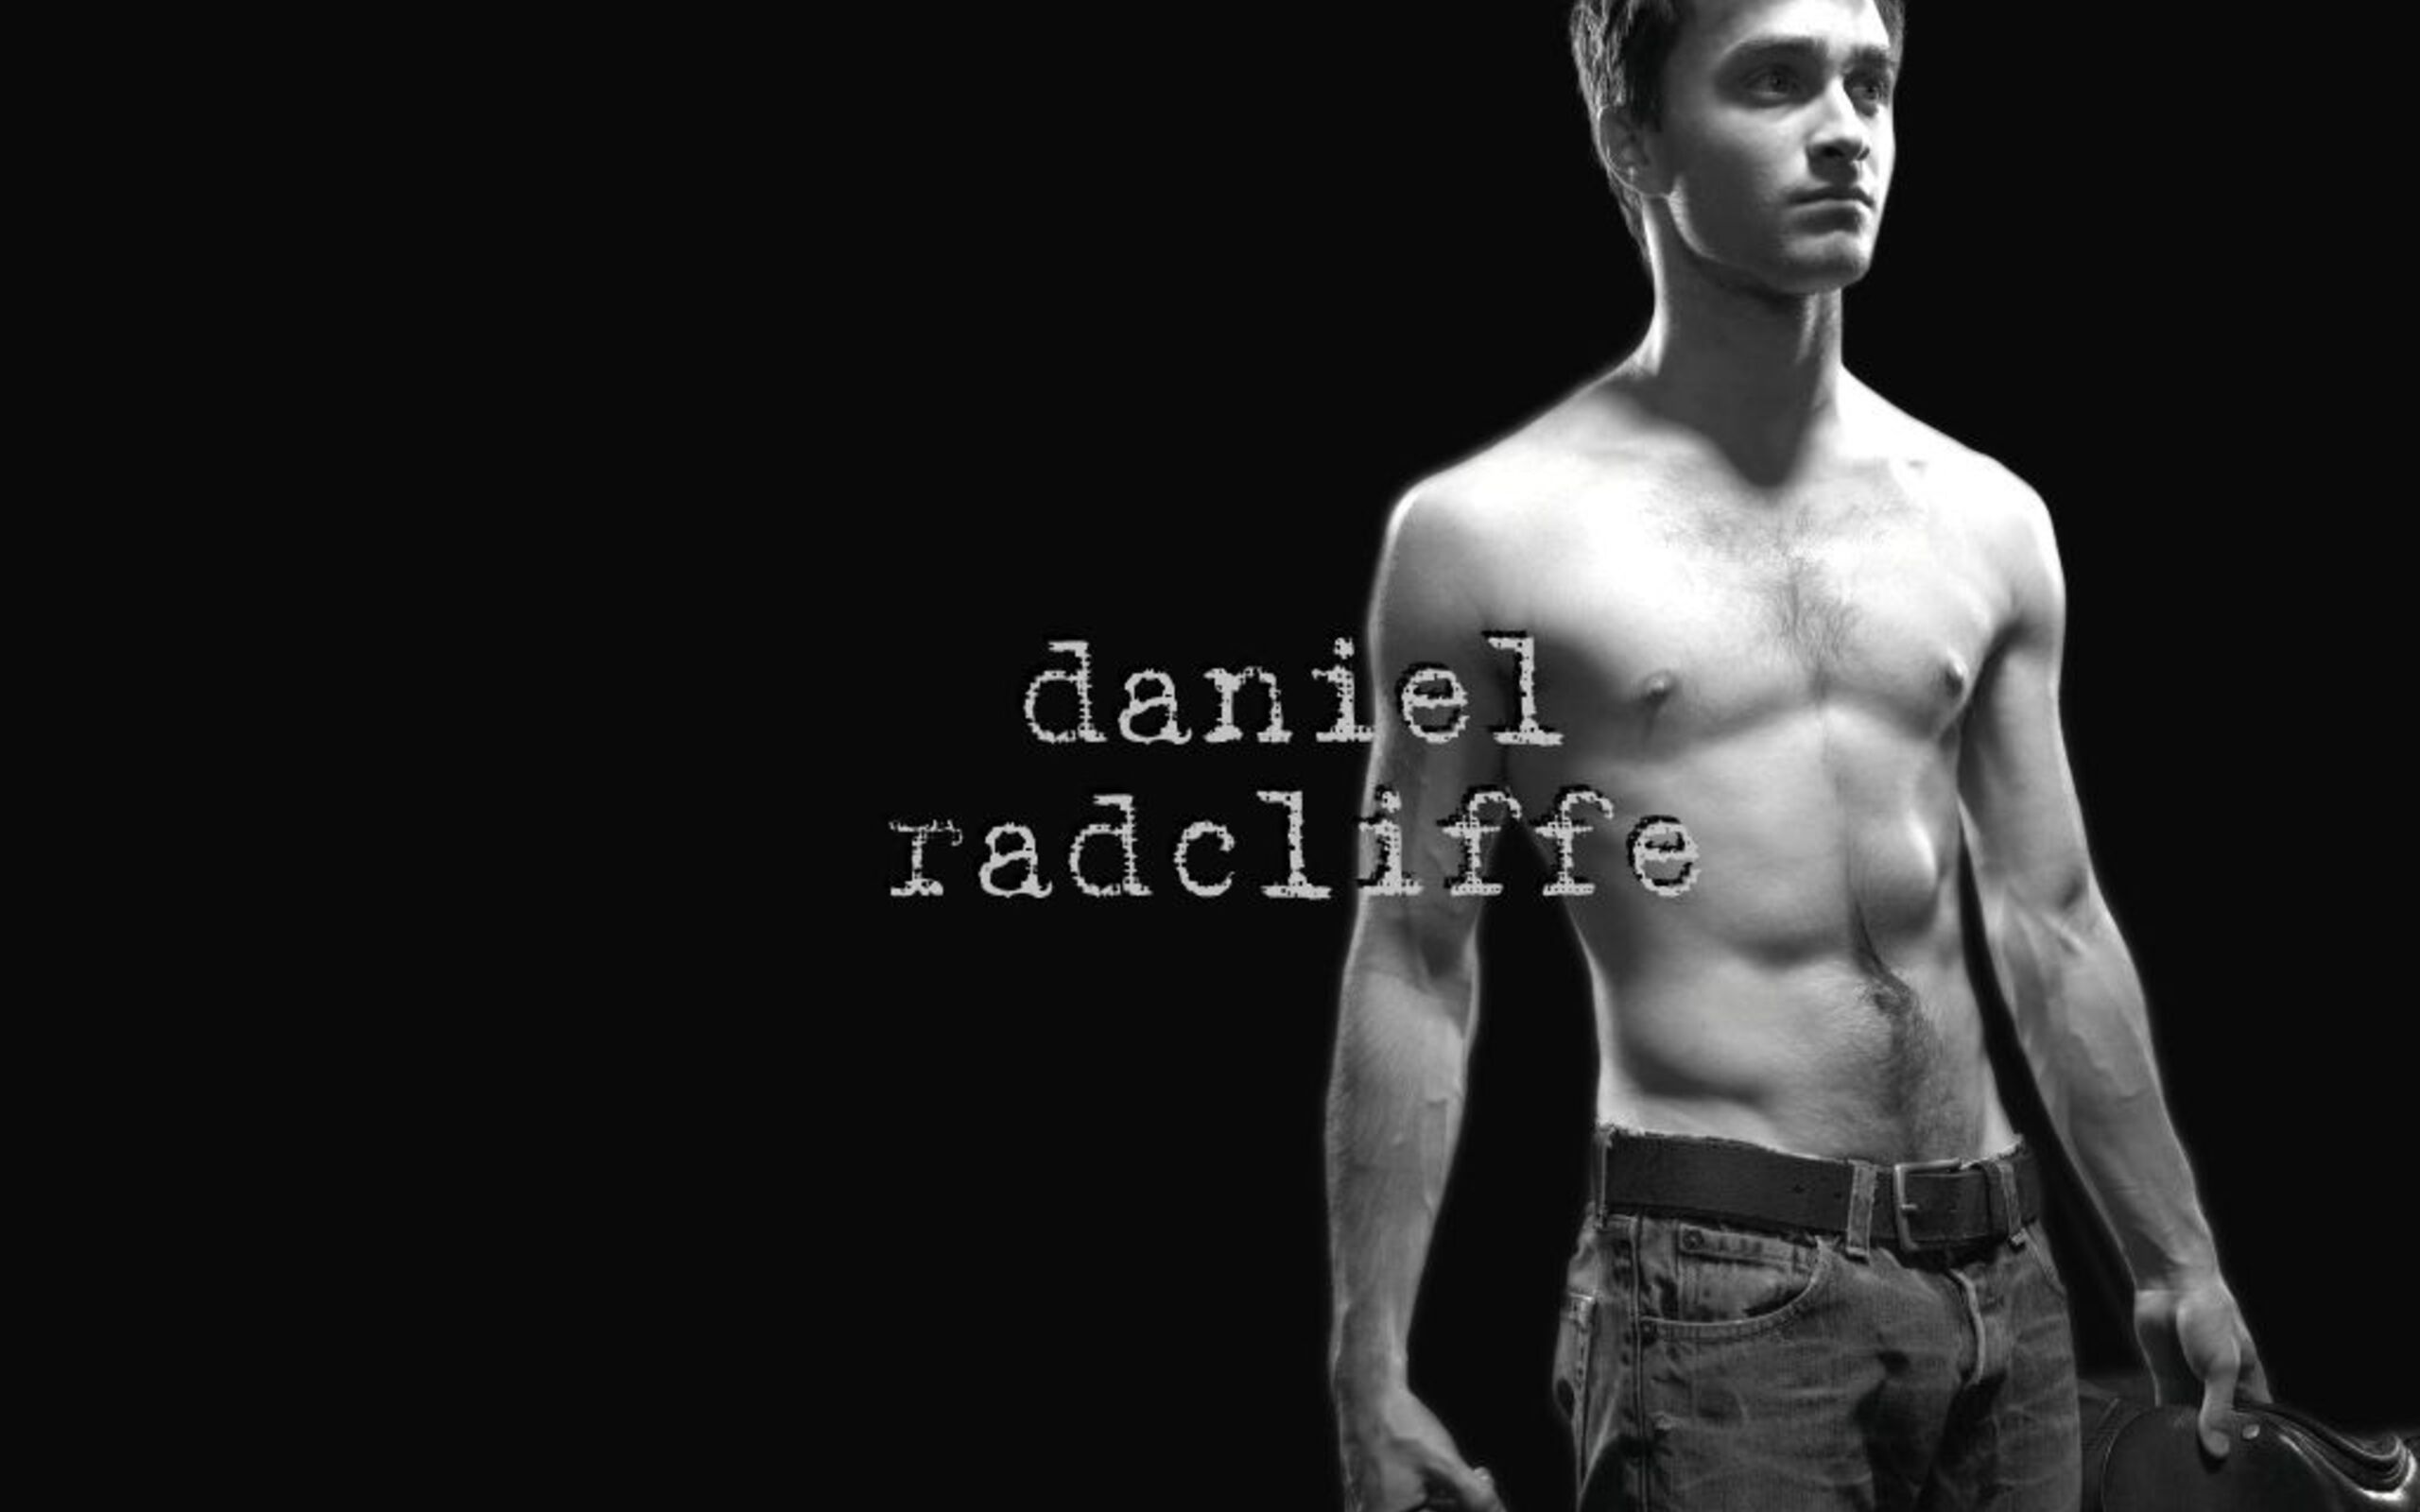 Daniel radcliffe strip